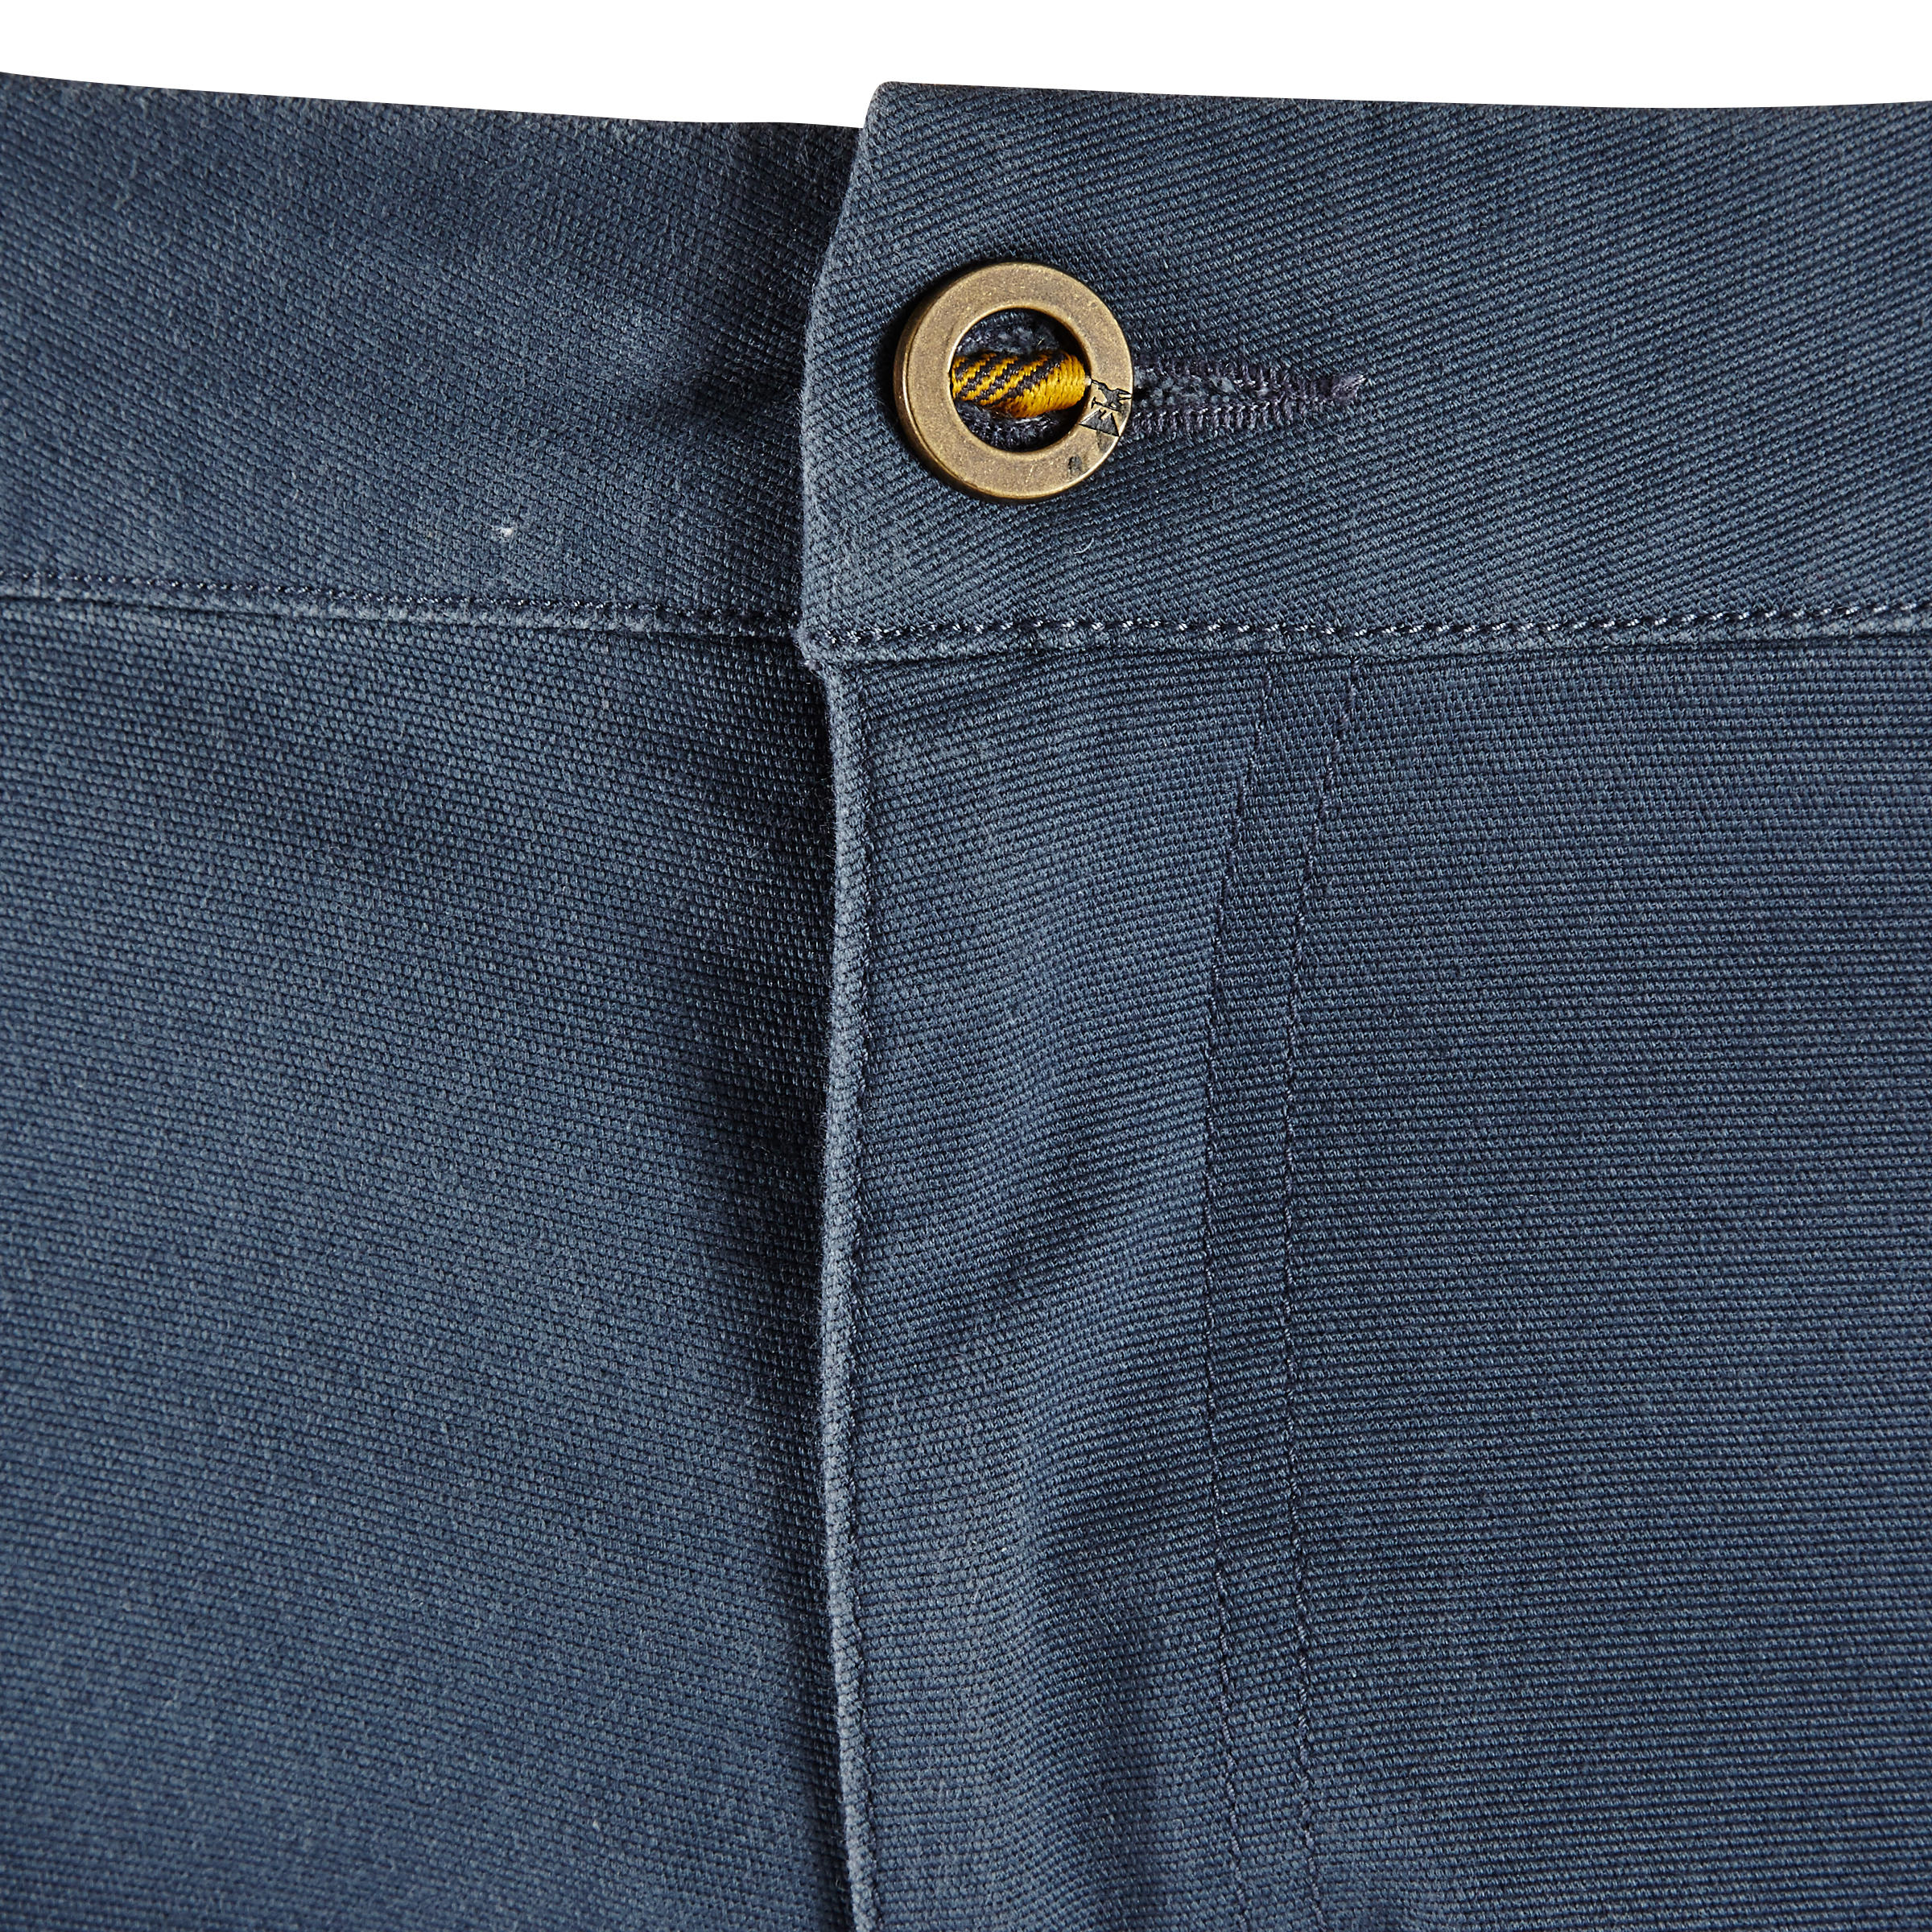 Vintage farah trousers   Gem